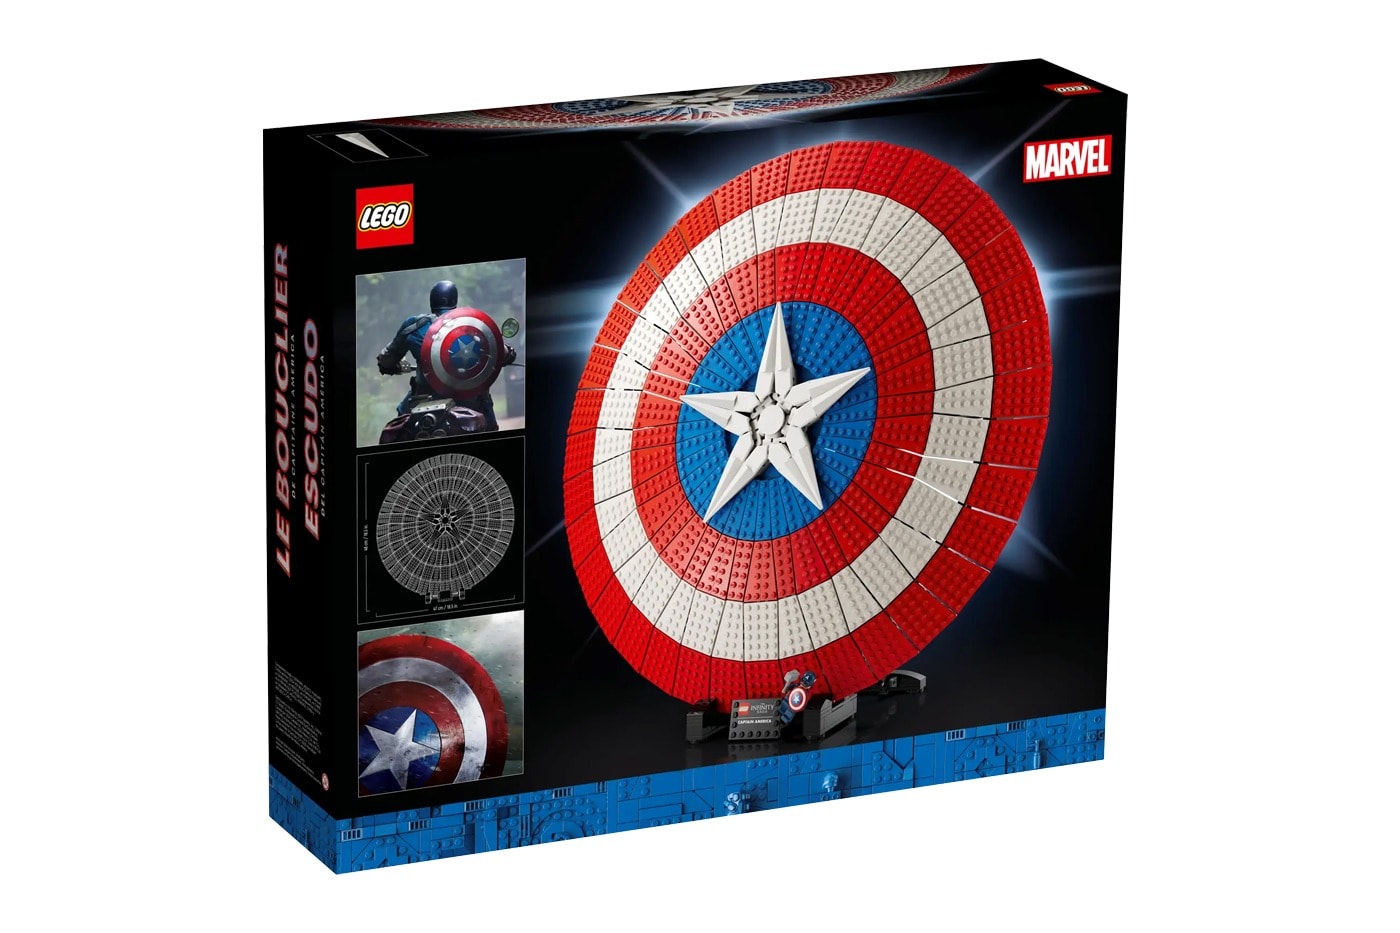 LEGO 正式推出 Marvel「美國隊長盾牌」套組